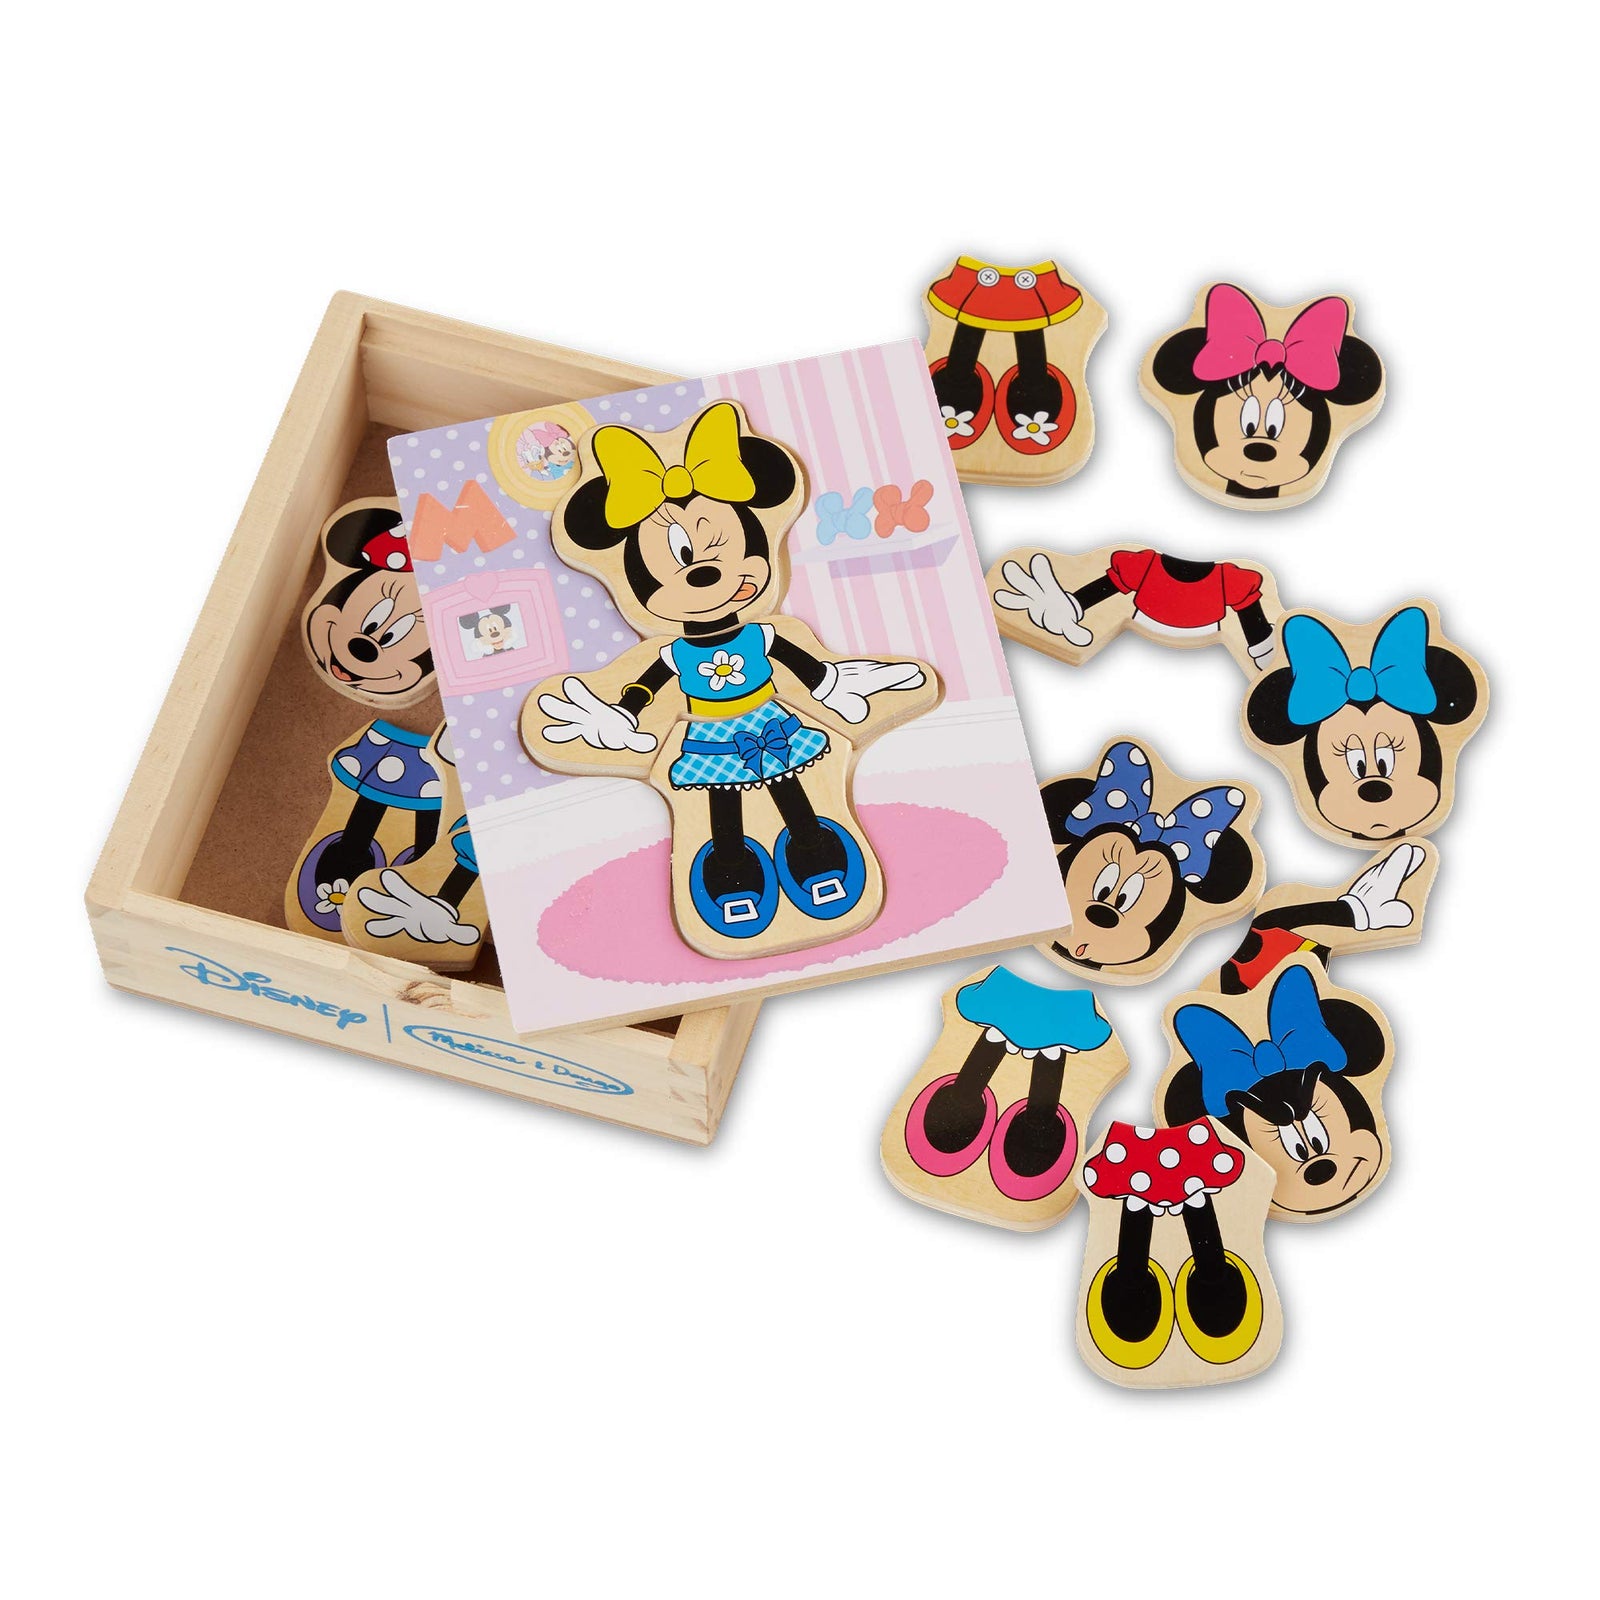 Melissa & Doug Disney Minnie Mouse Mix and Match Dress-Up Wooden Play Set (18 pcs)